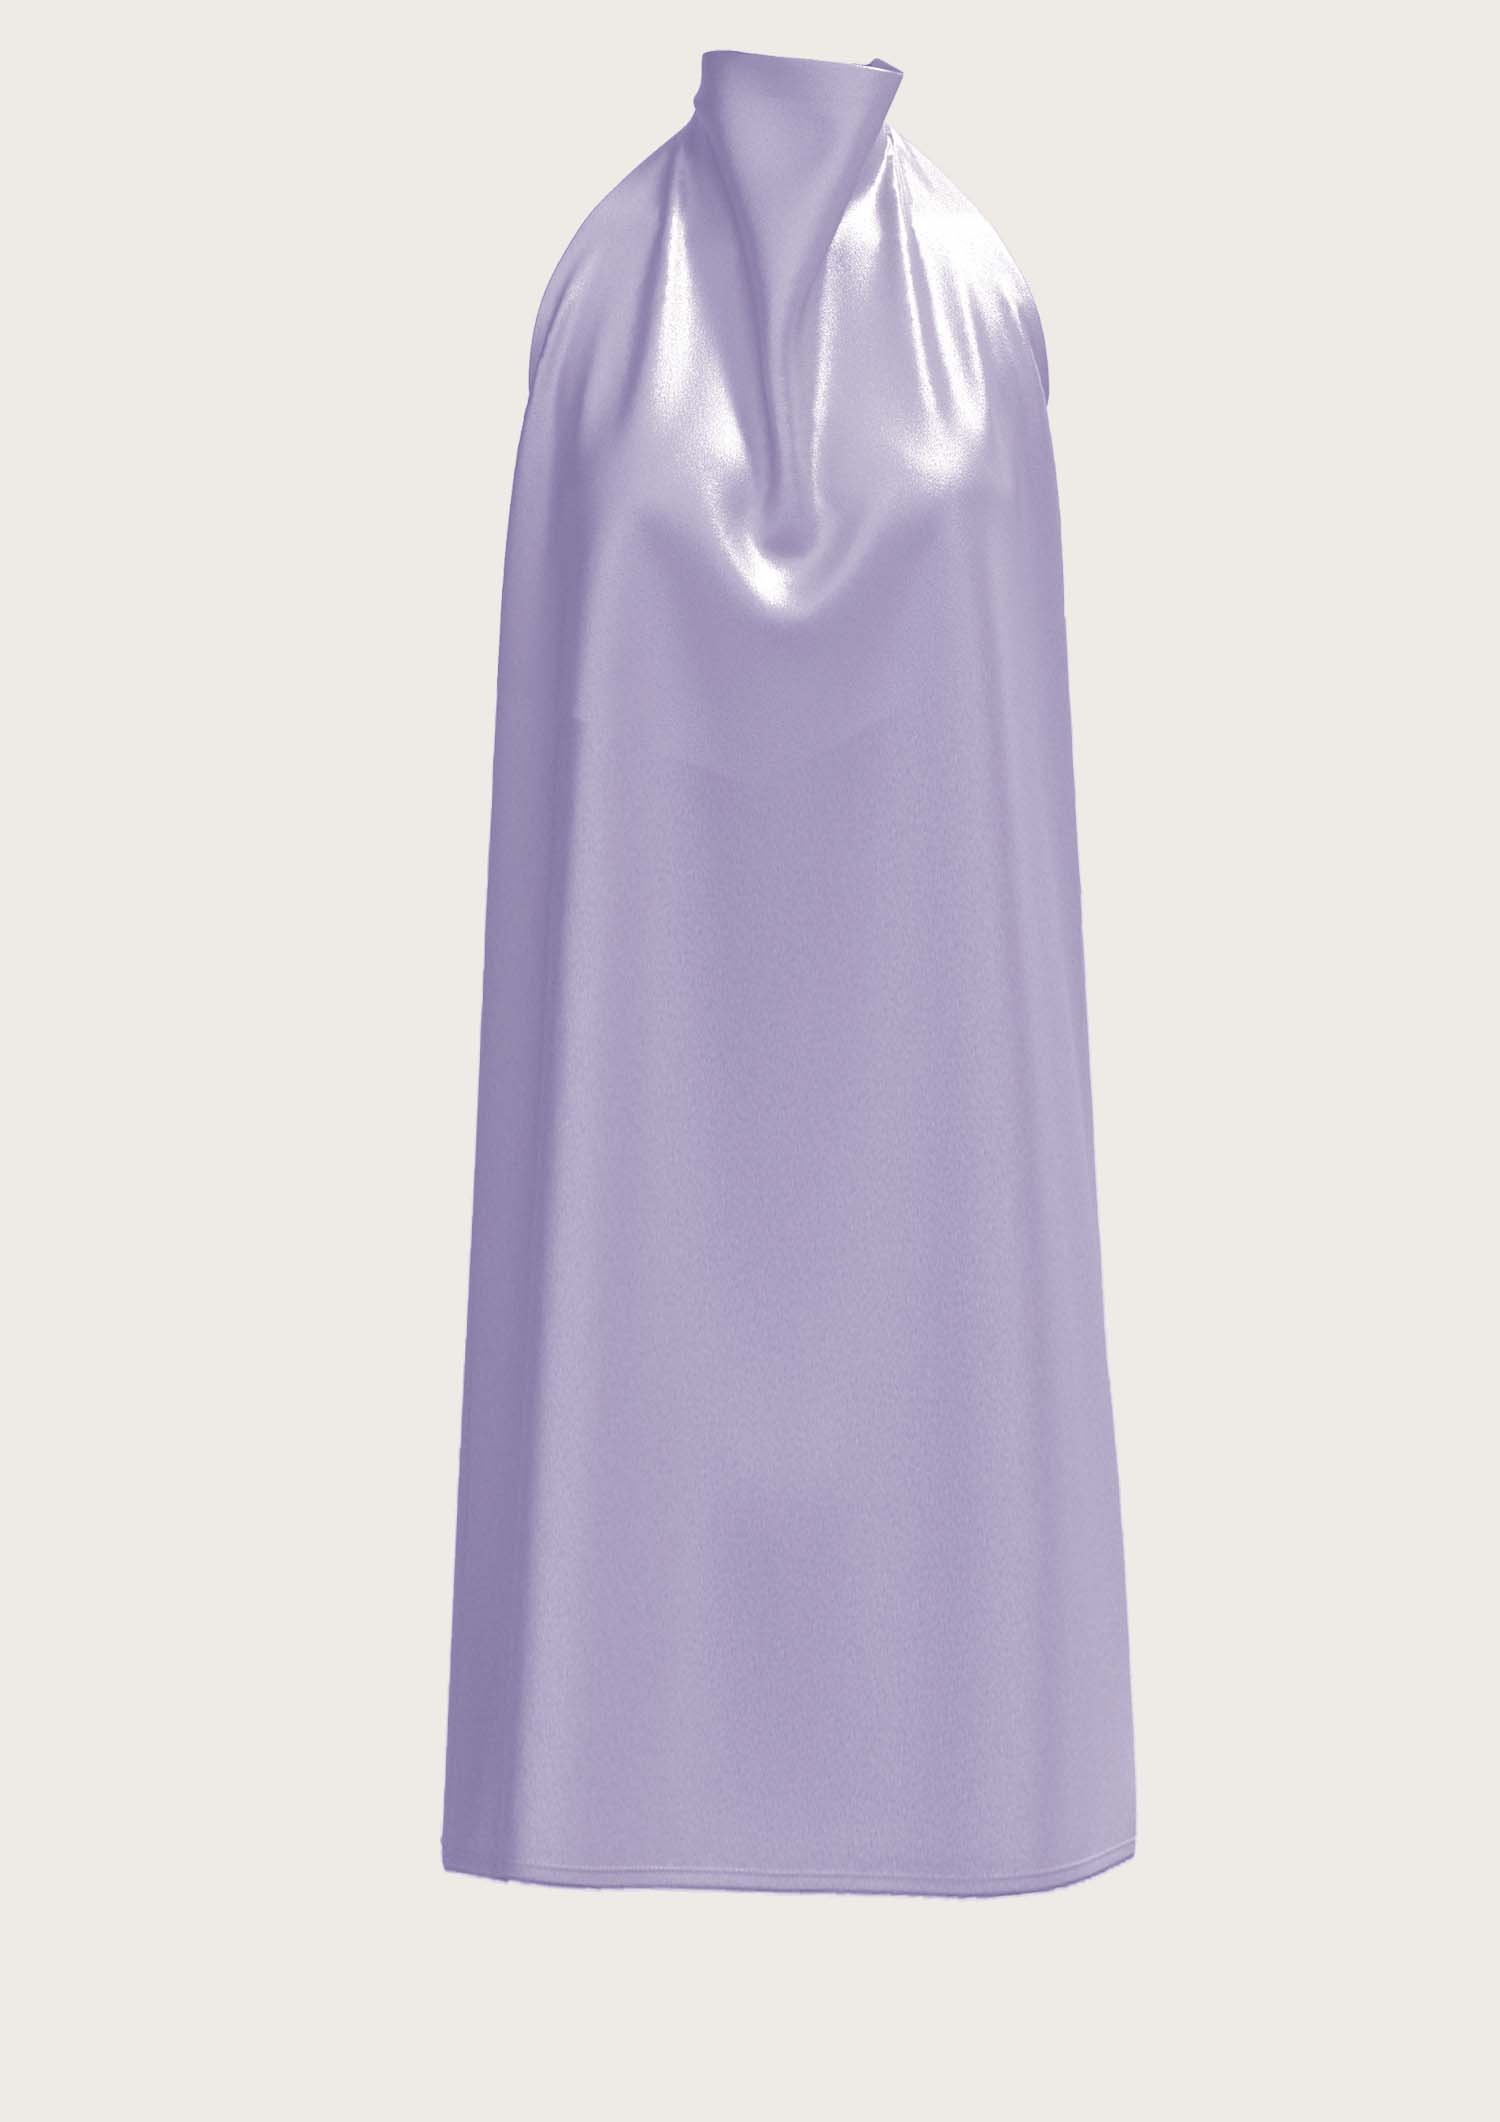 Silk Neckholder Dress Sophie in Lavender (Kopie) (Kopie)